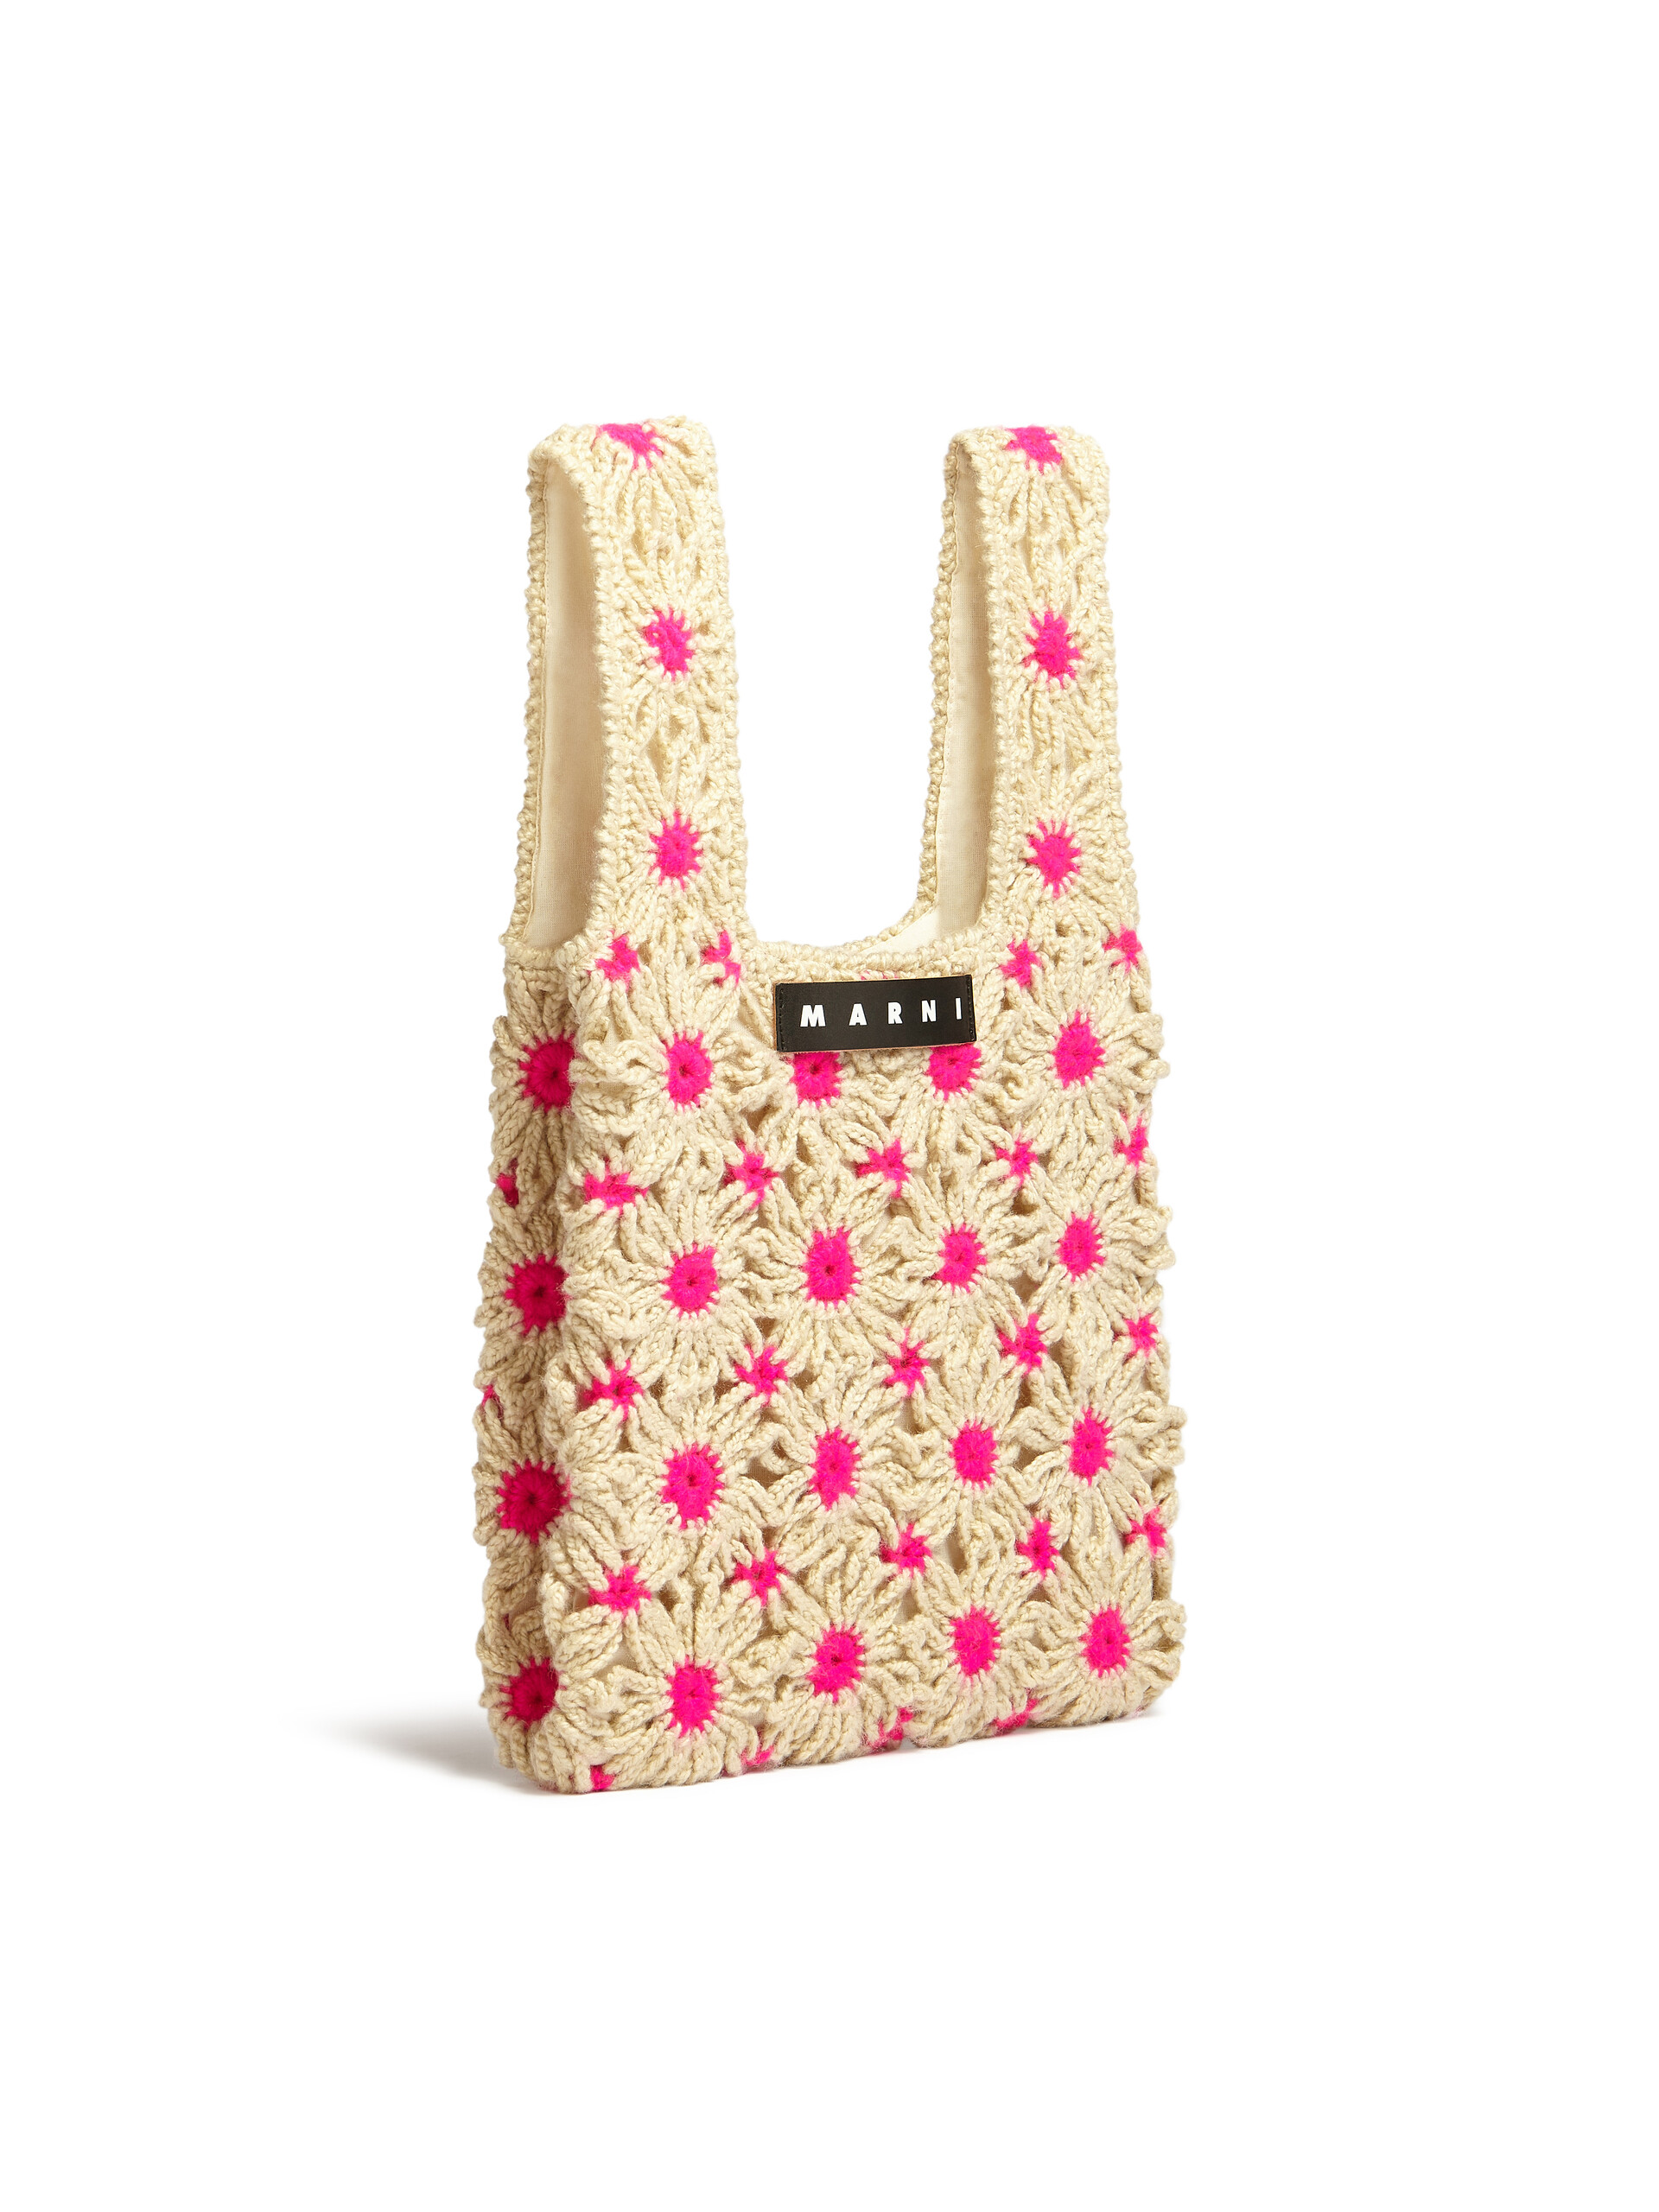 MARNI MARKET FISH bag in pink crochet - Bags - Image 2